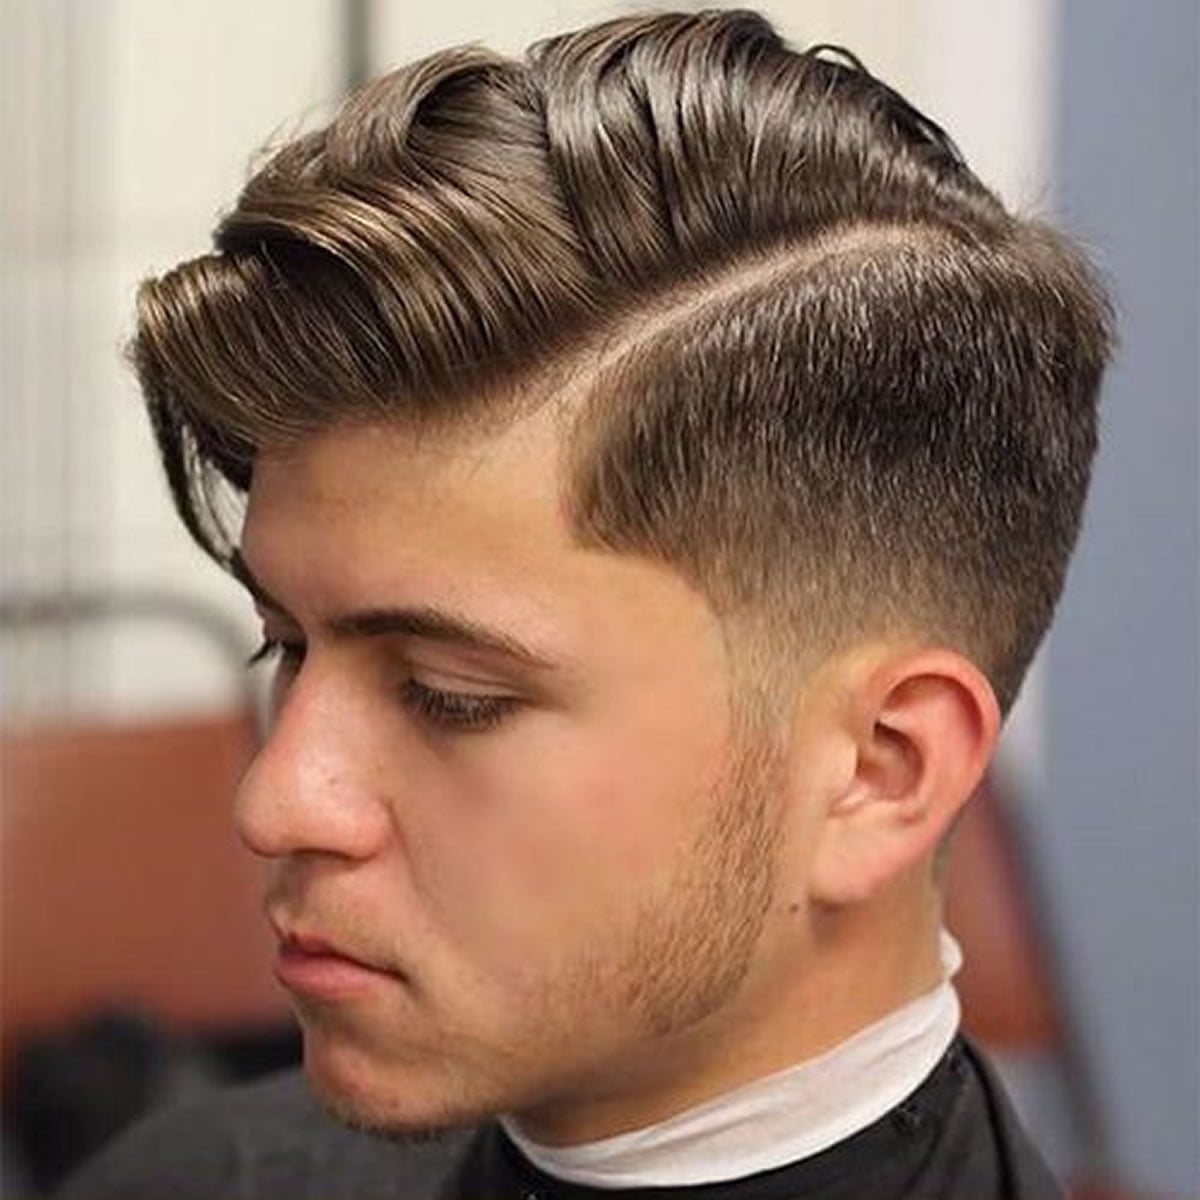 2020 Short Haircuts for Men – 17 Great Short Hair Ideas ...